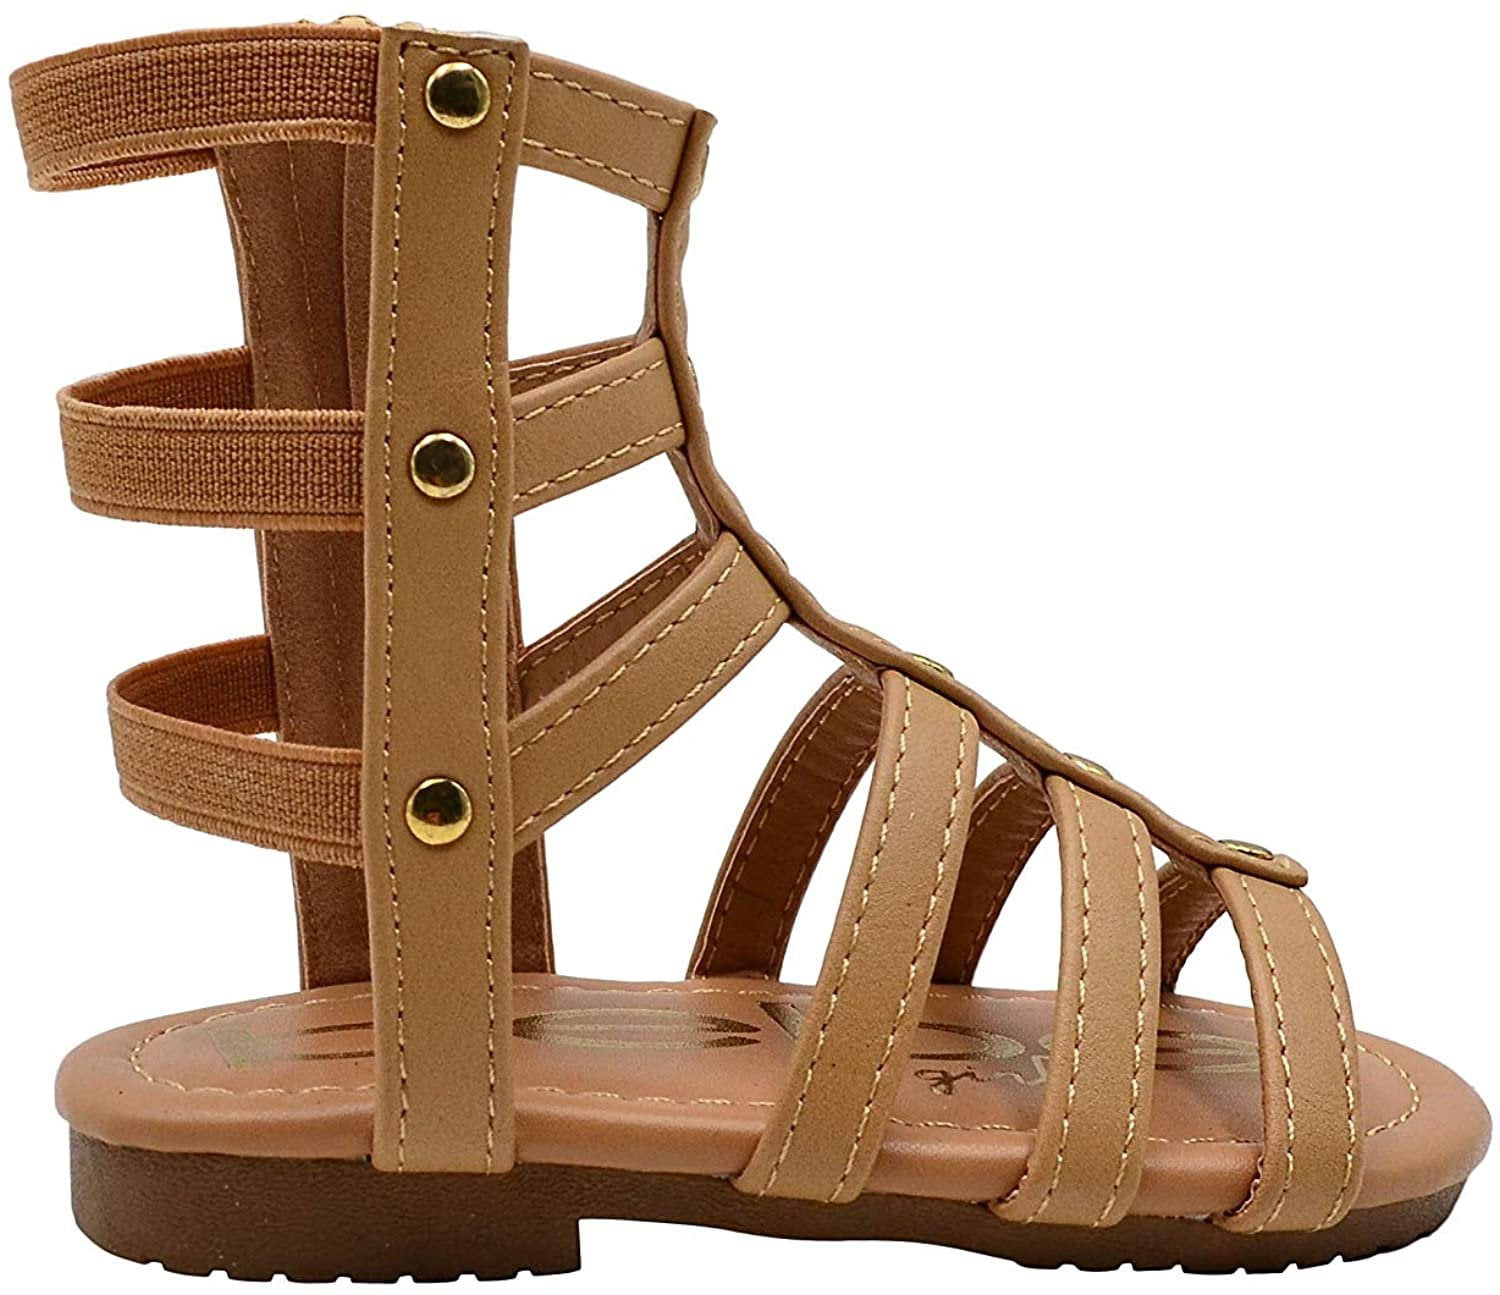 Women's New Fringed Studded Rhinestones Sandal Gladiators Tassels Shoes Sz 5-10